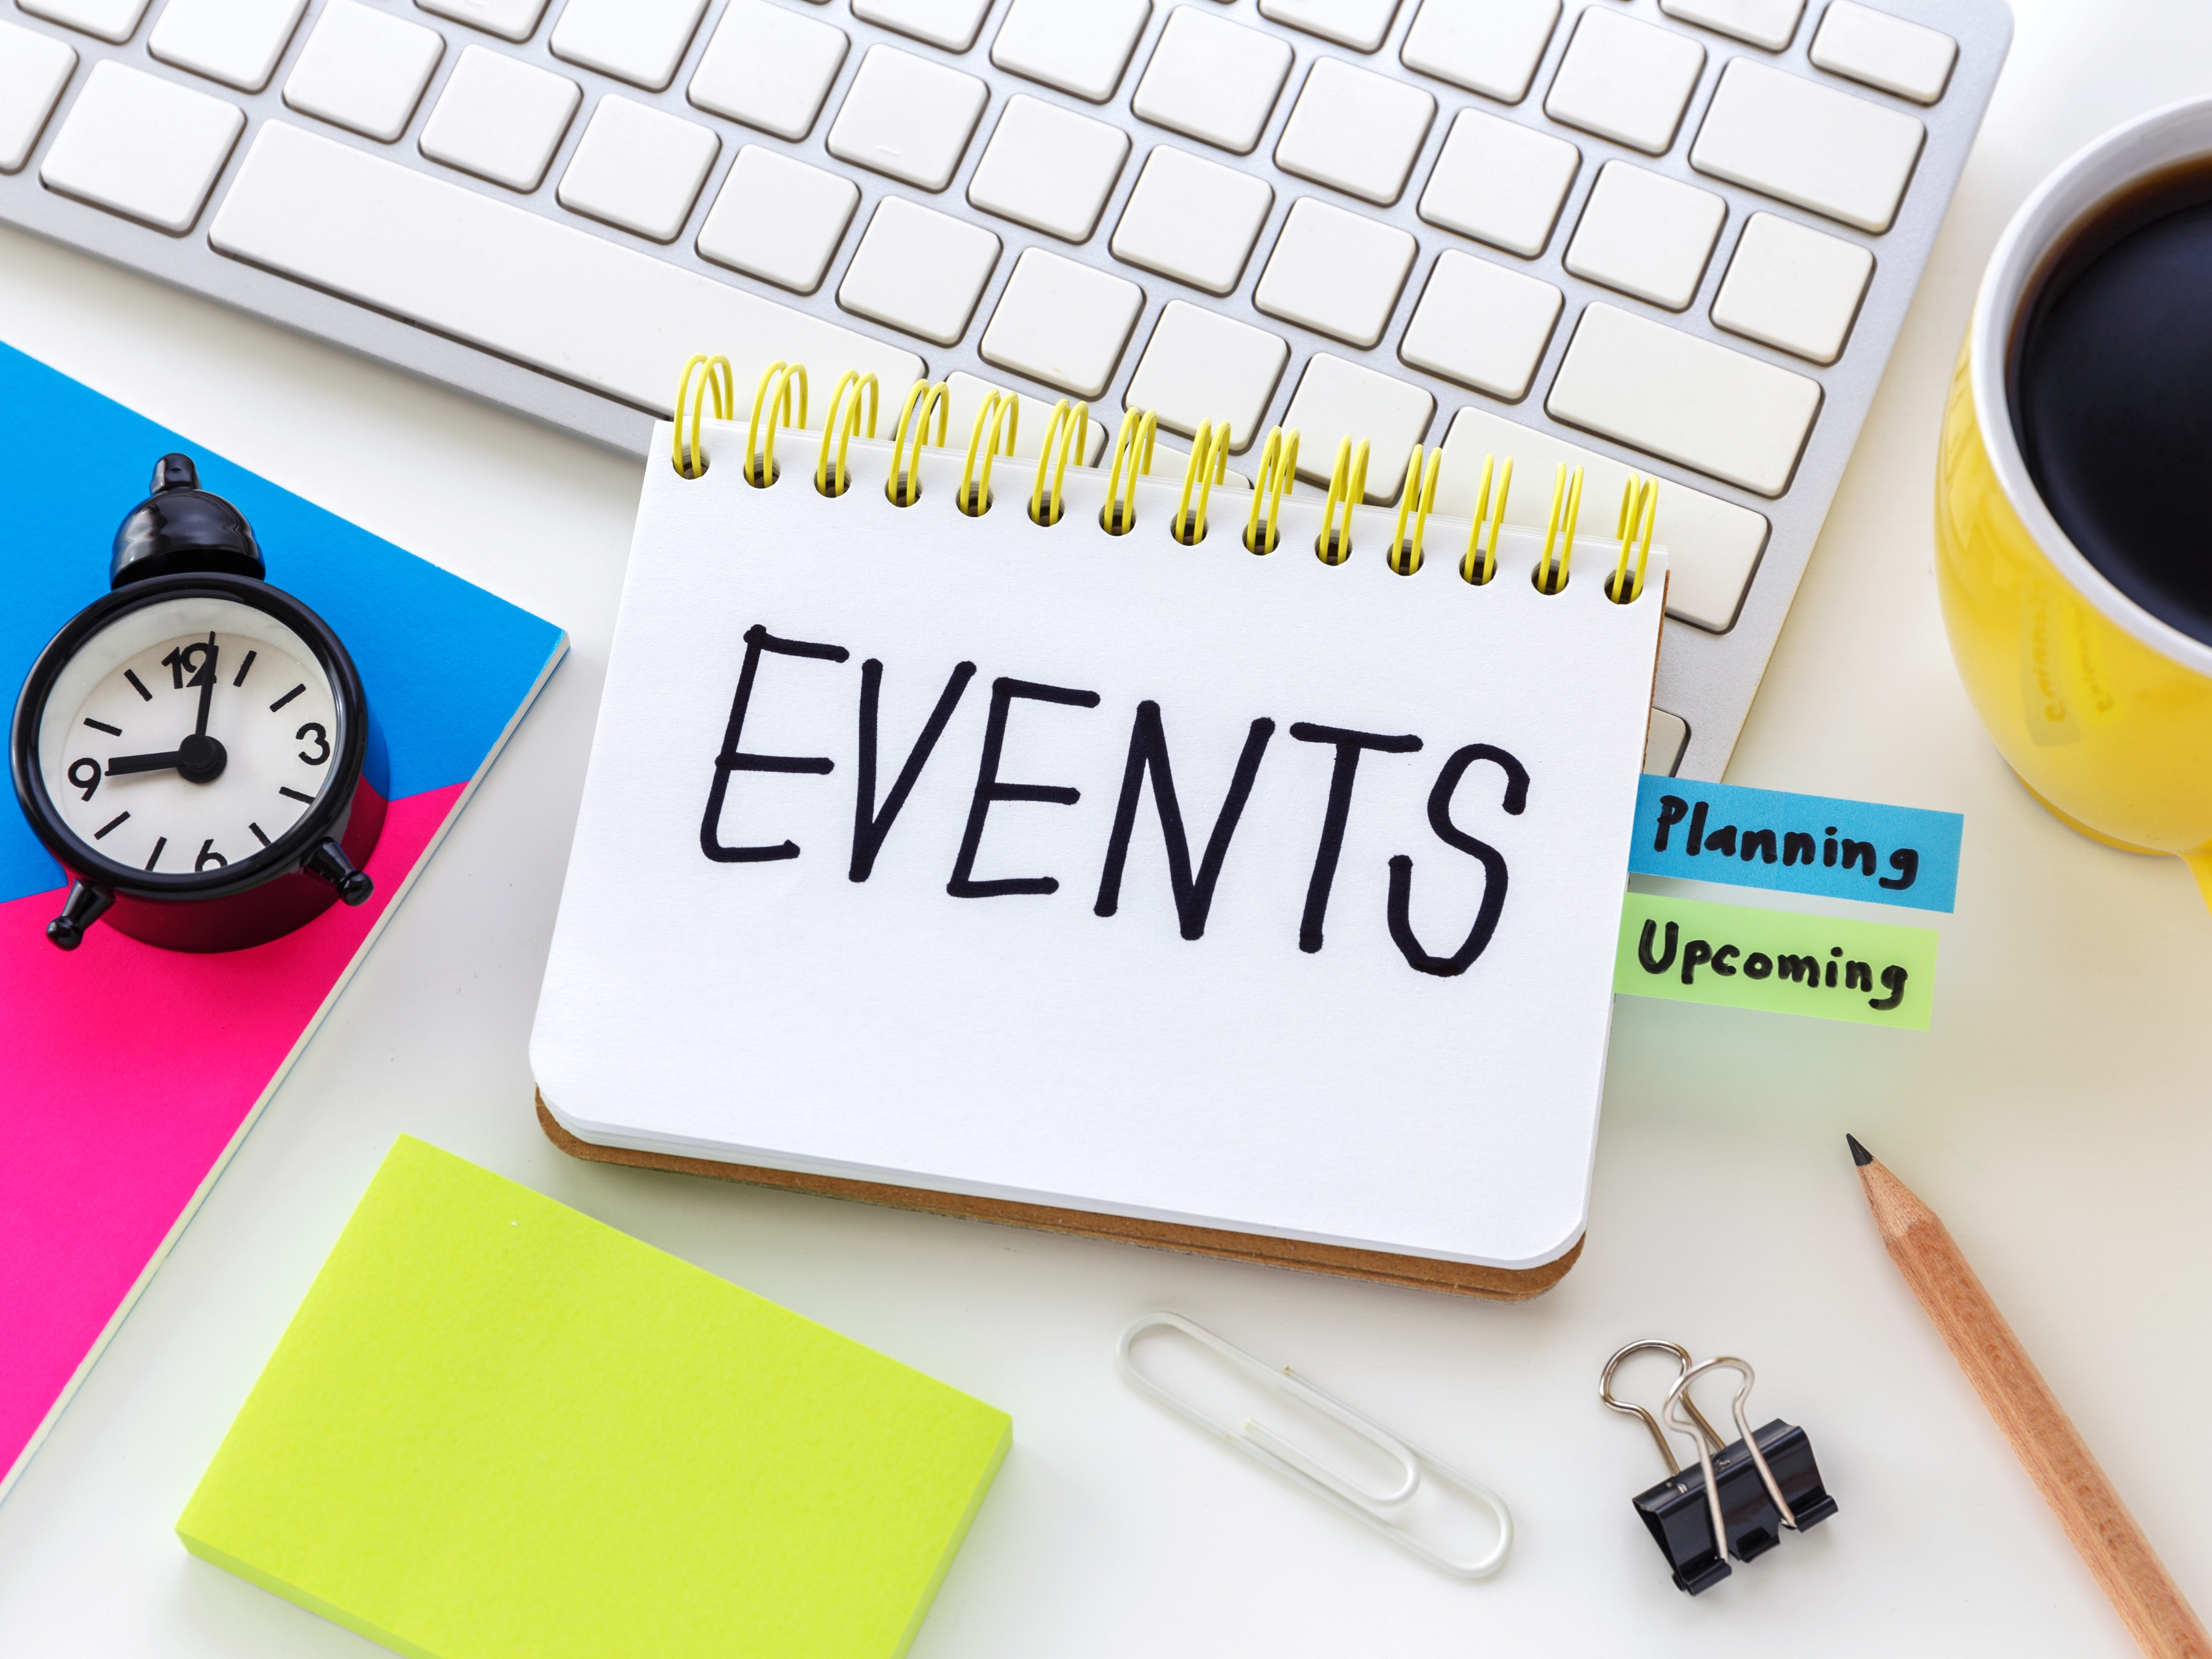 Public Events & Sponsorships